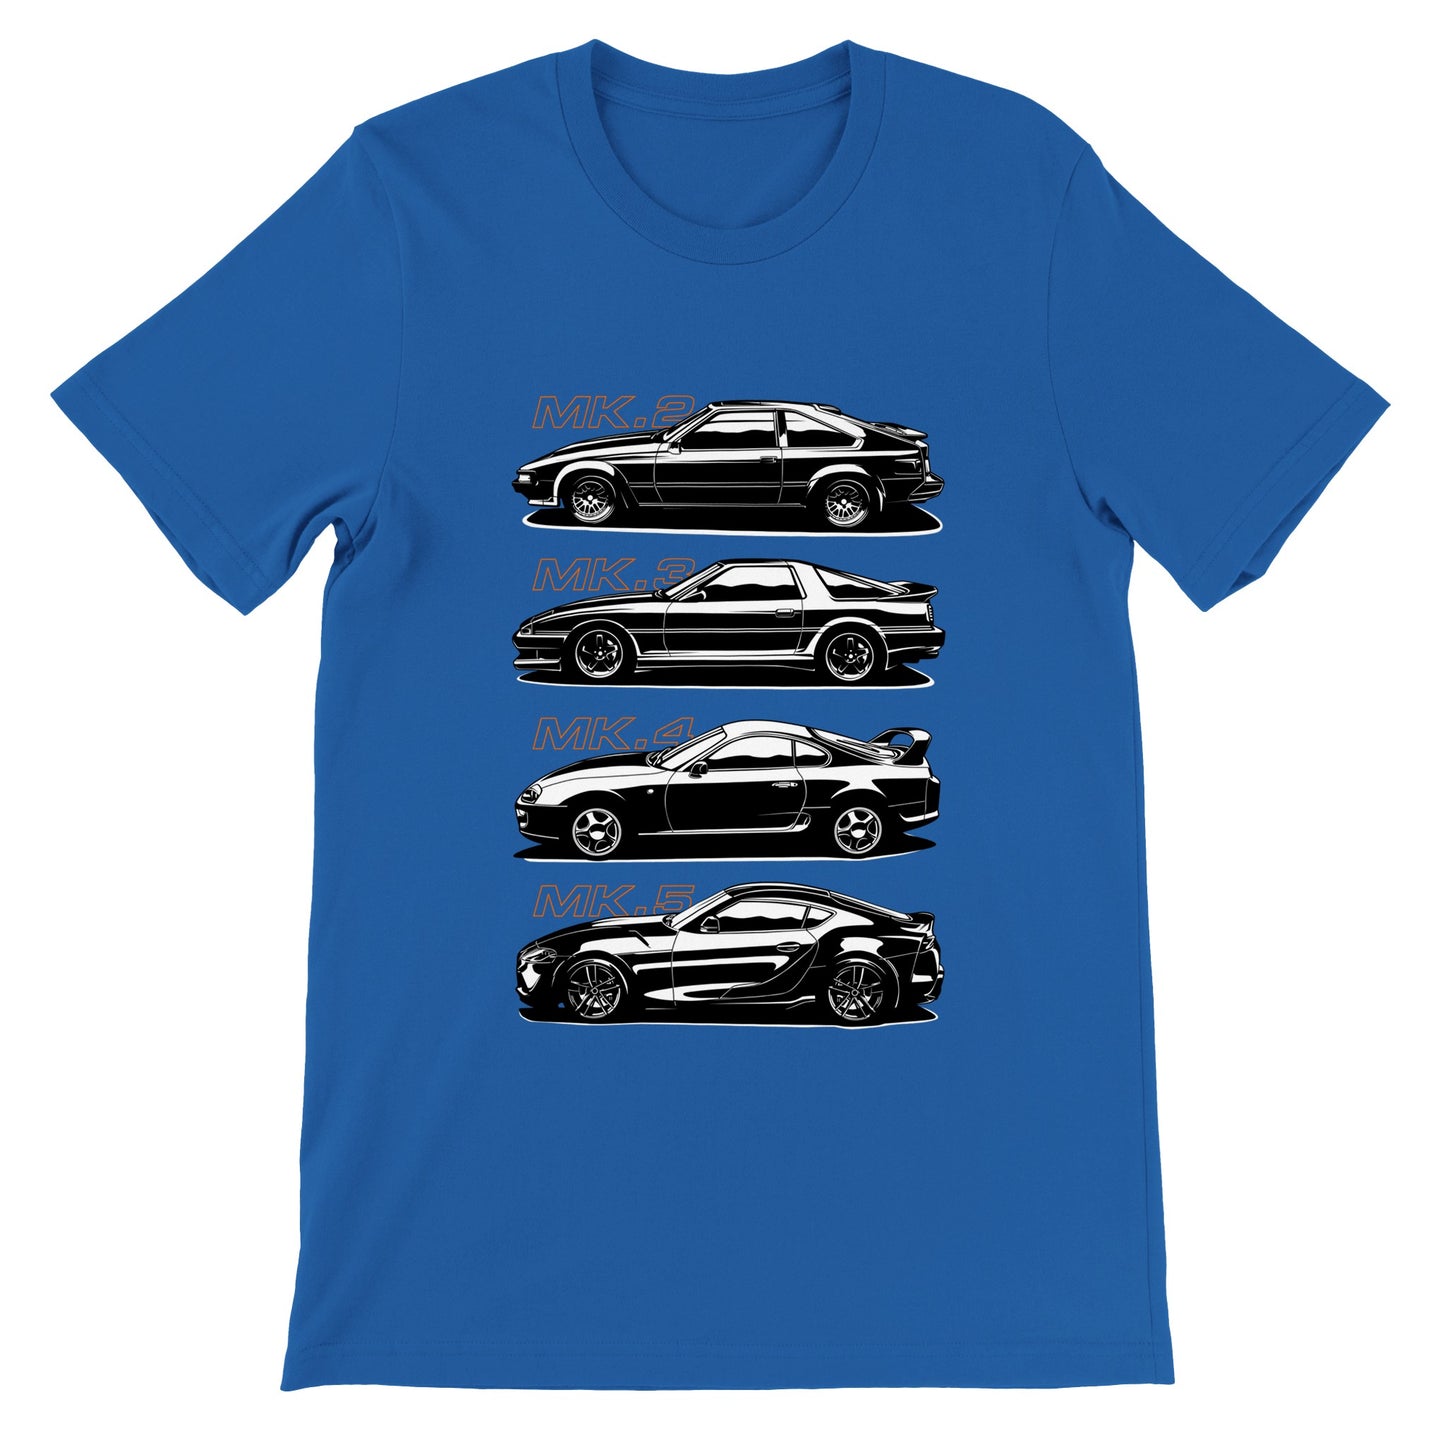 Car T-shirt - The History of Supra Artwork - Premium Unisex T-shirt 